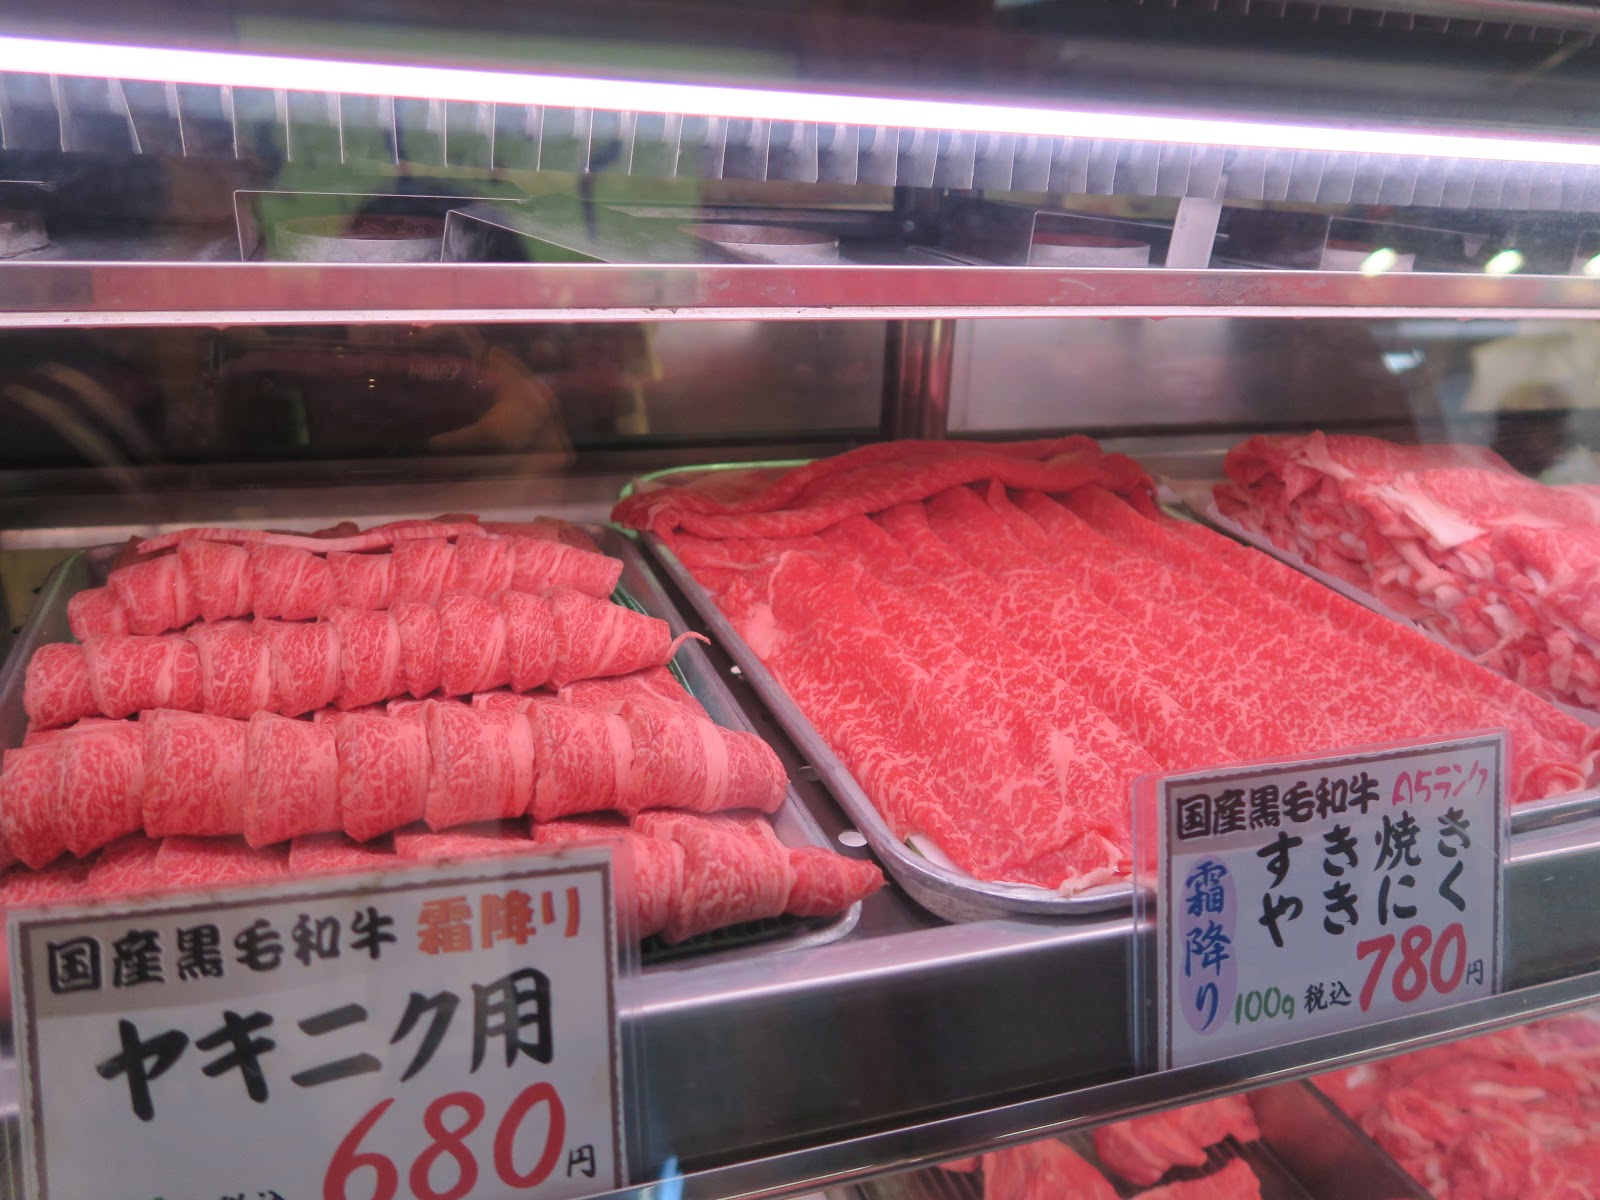 meat japan tokyo tsukiji fish market raw prime